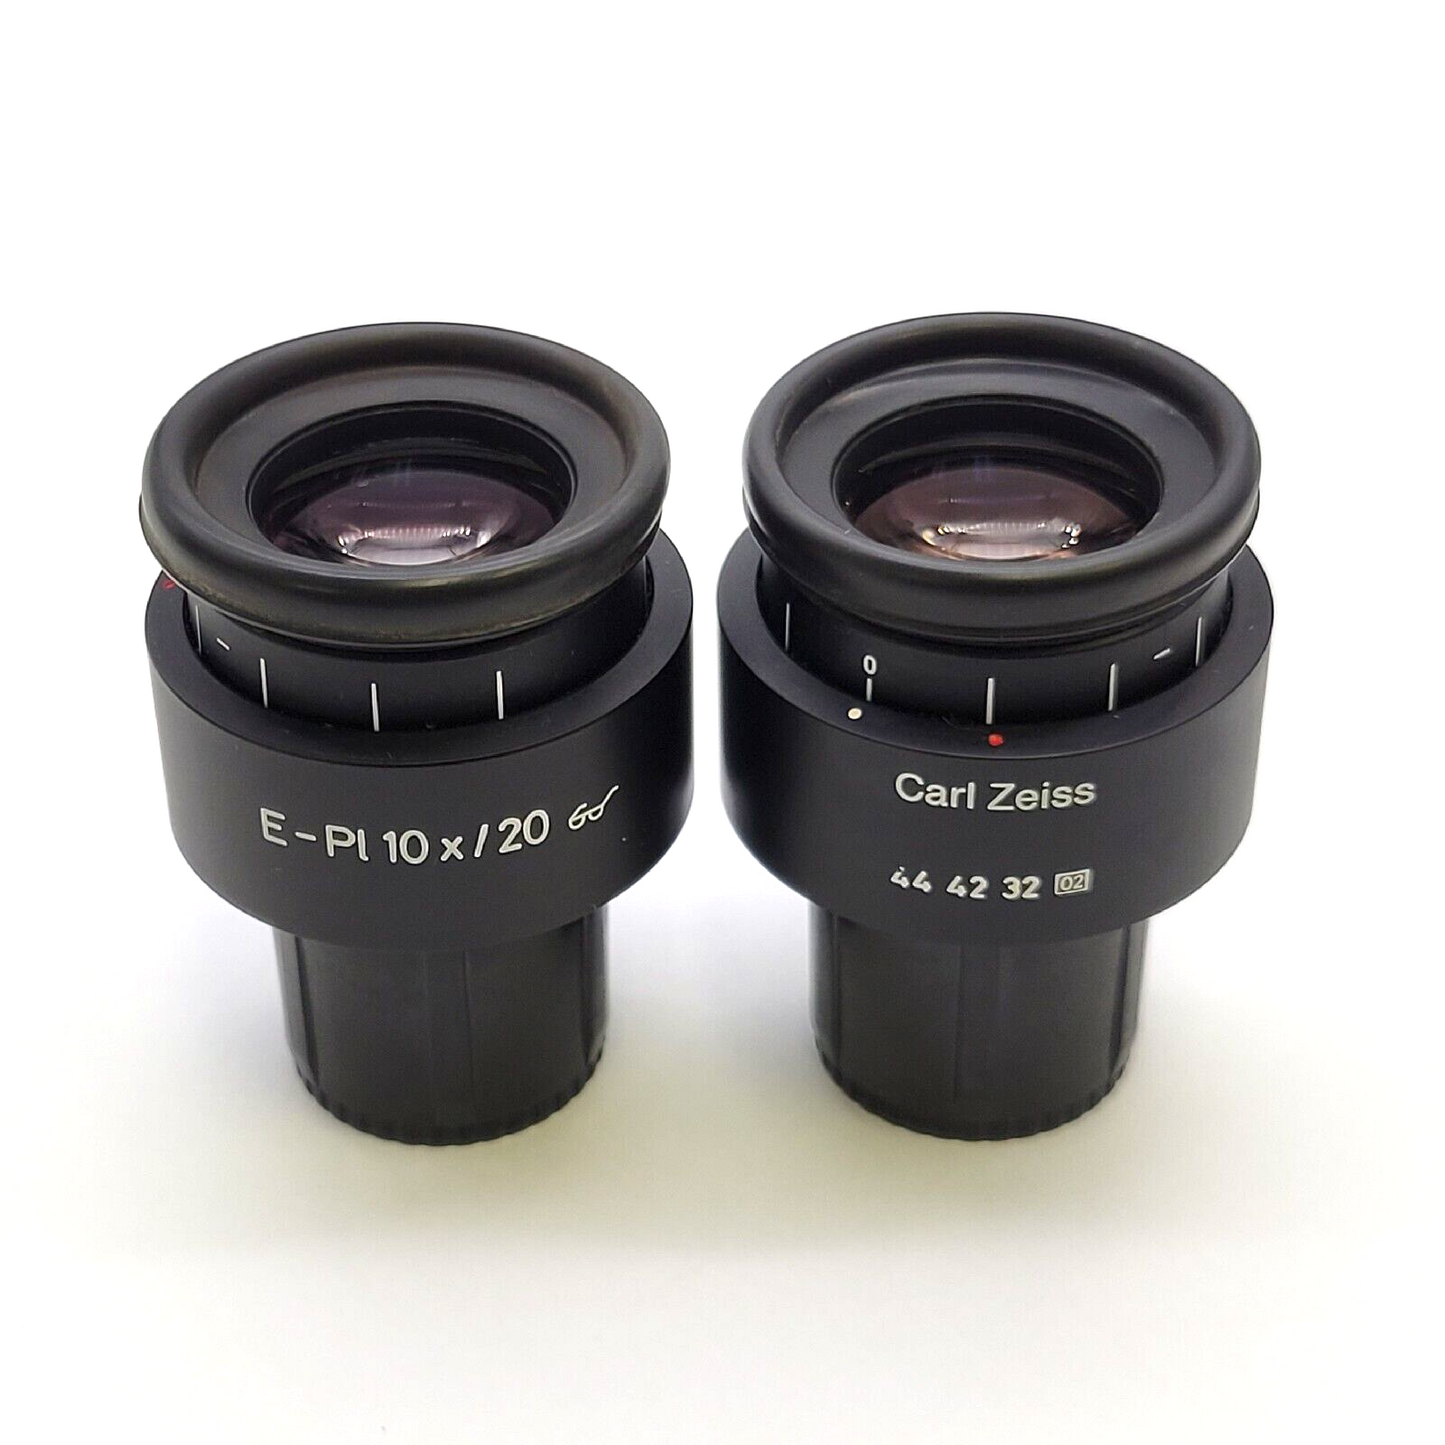 Zeiss Microscope Eyepiece Pair E-Pl 10x/20 444232-9902 Focusing Eyepieces - microscopemarketplace